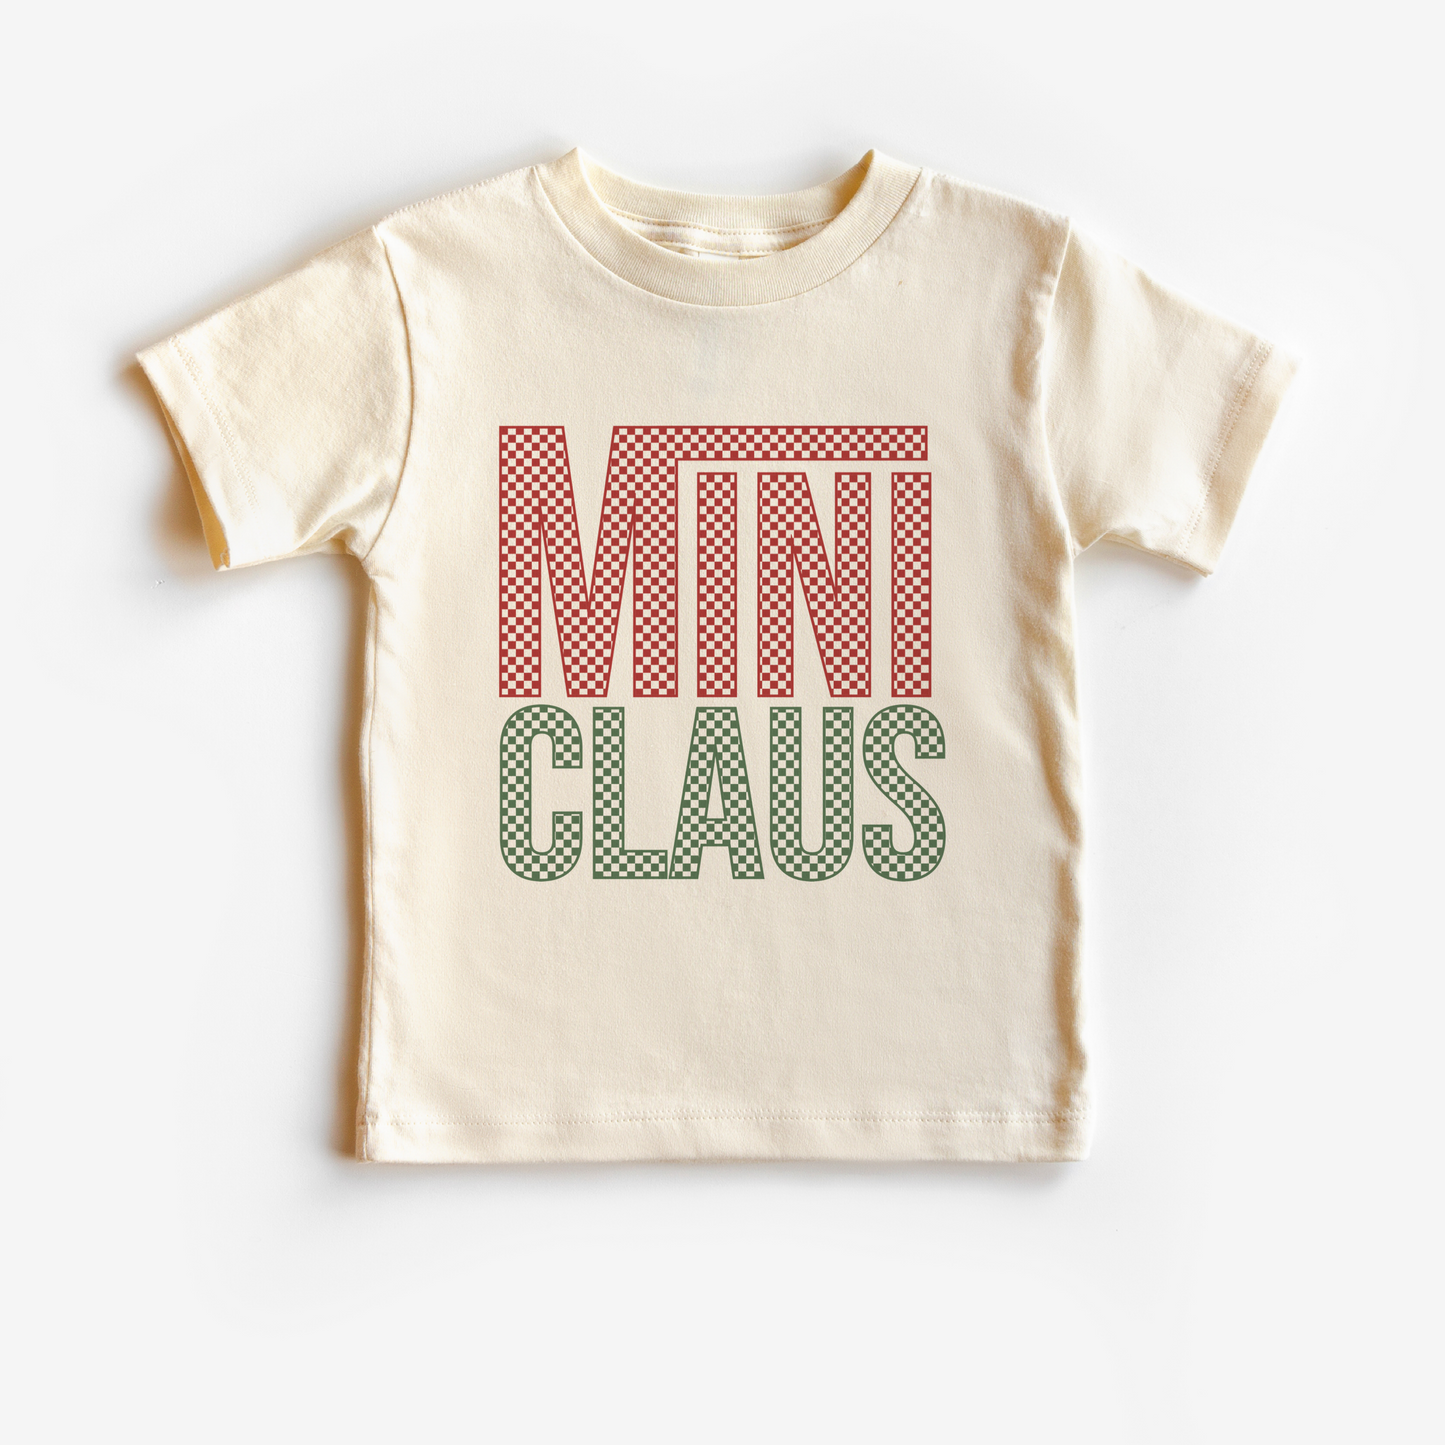 Mini Claus Christmas t shirt for kids